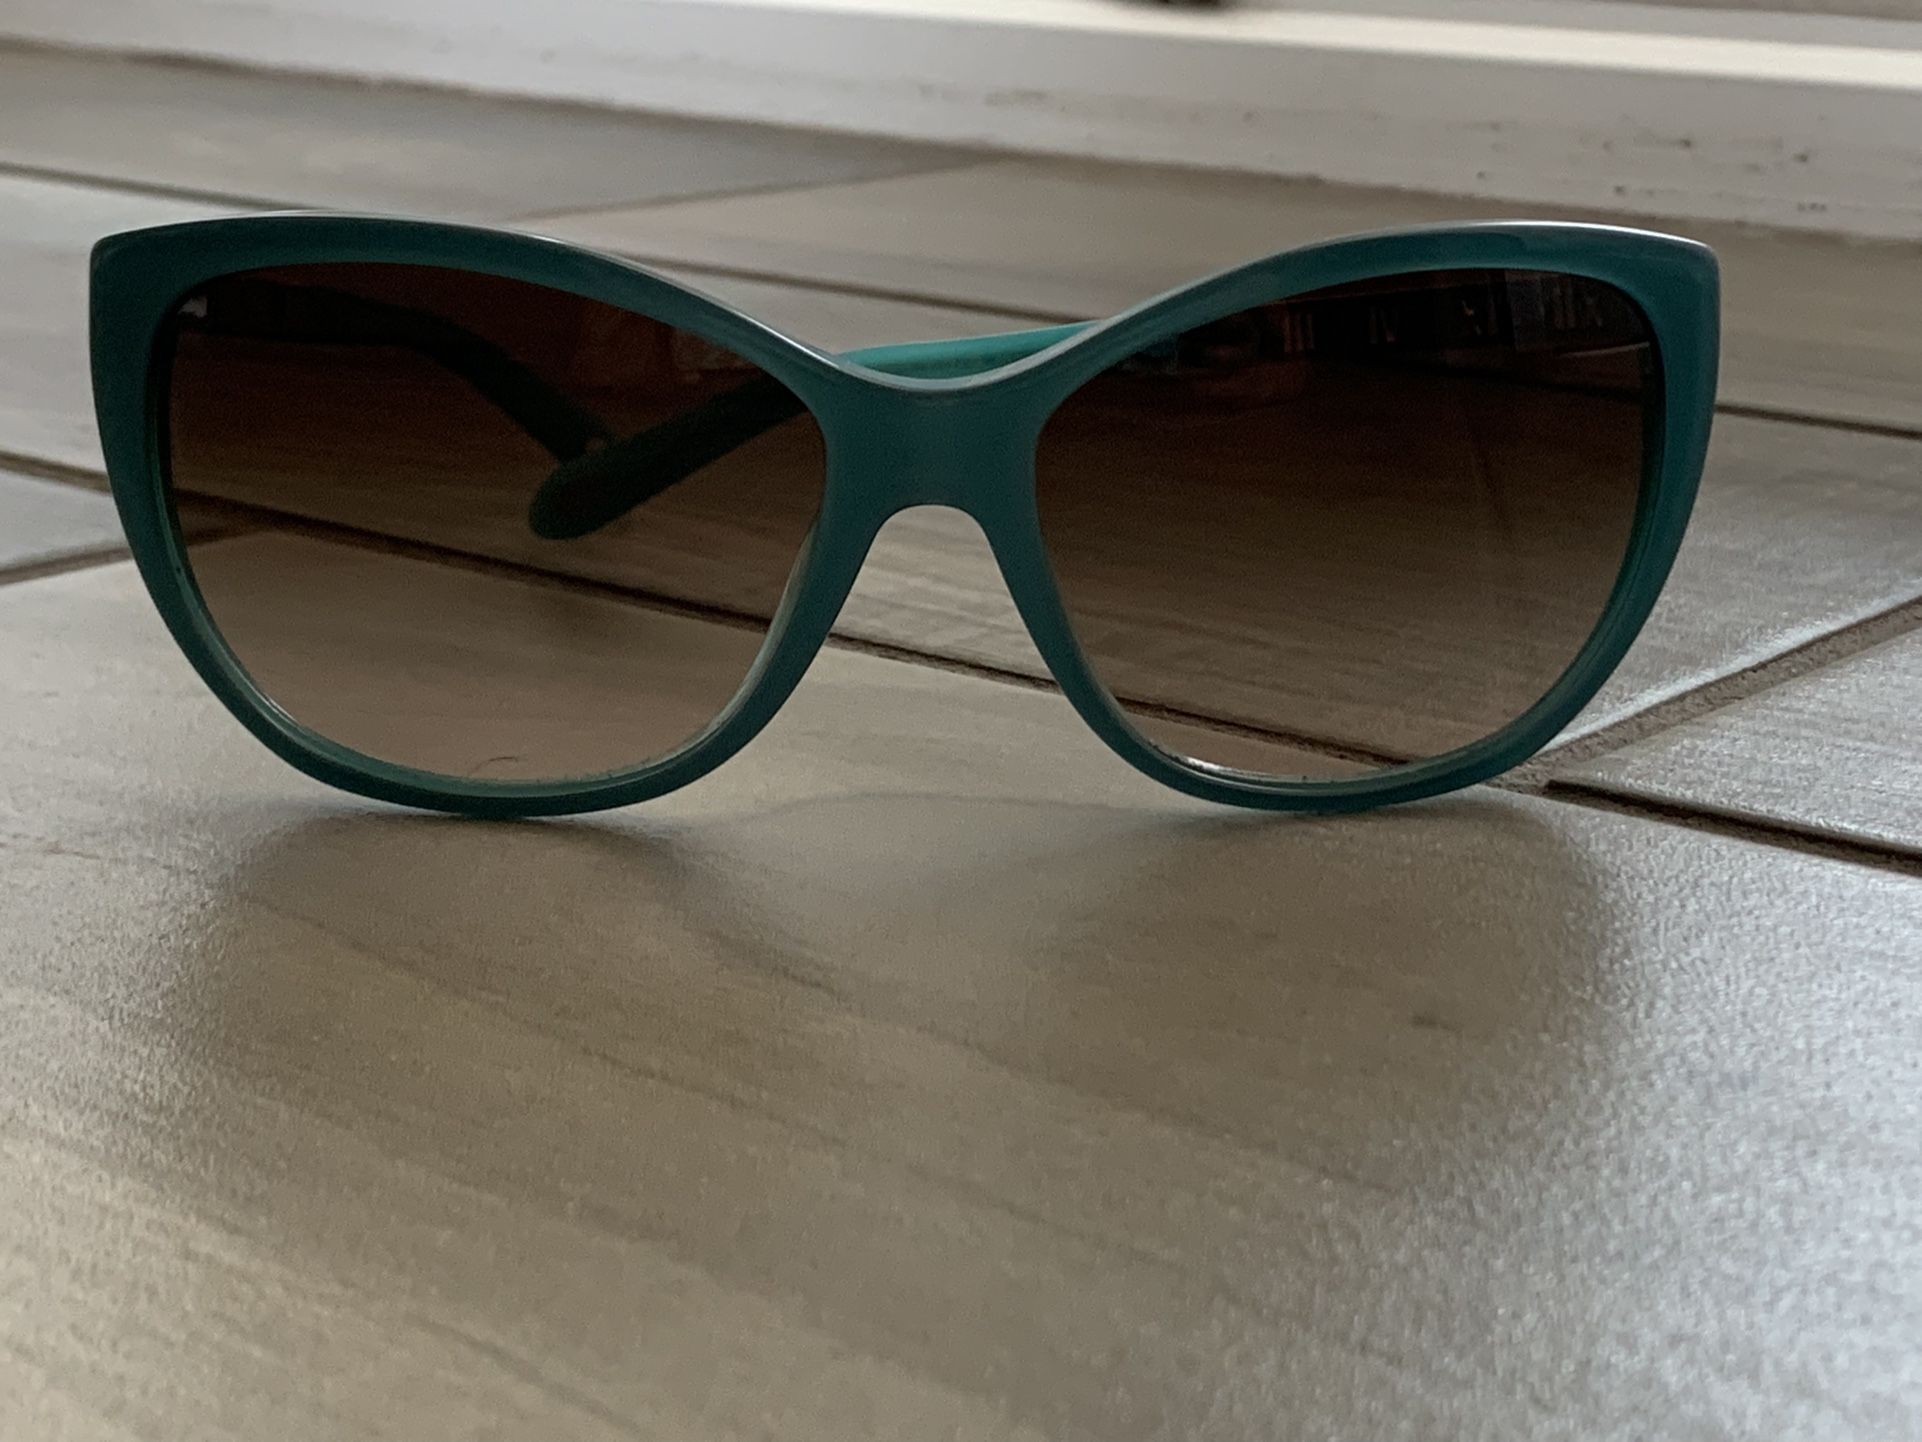 Tiffany & Co Designer Teal sunglasses